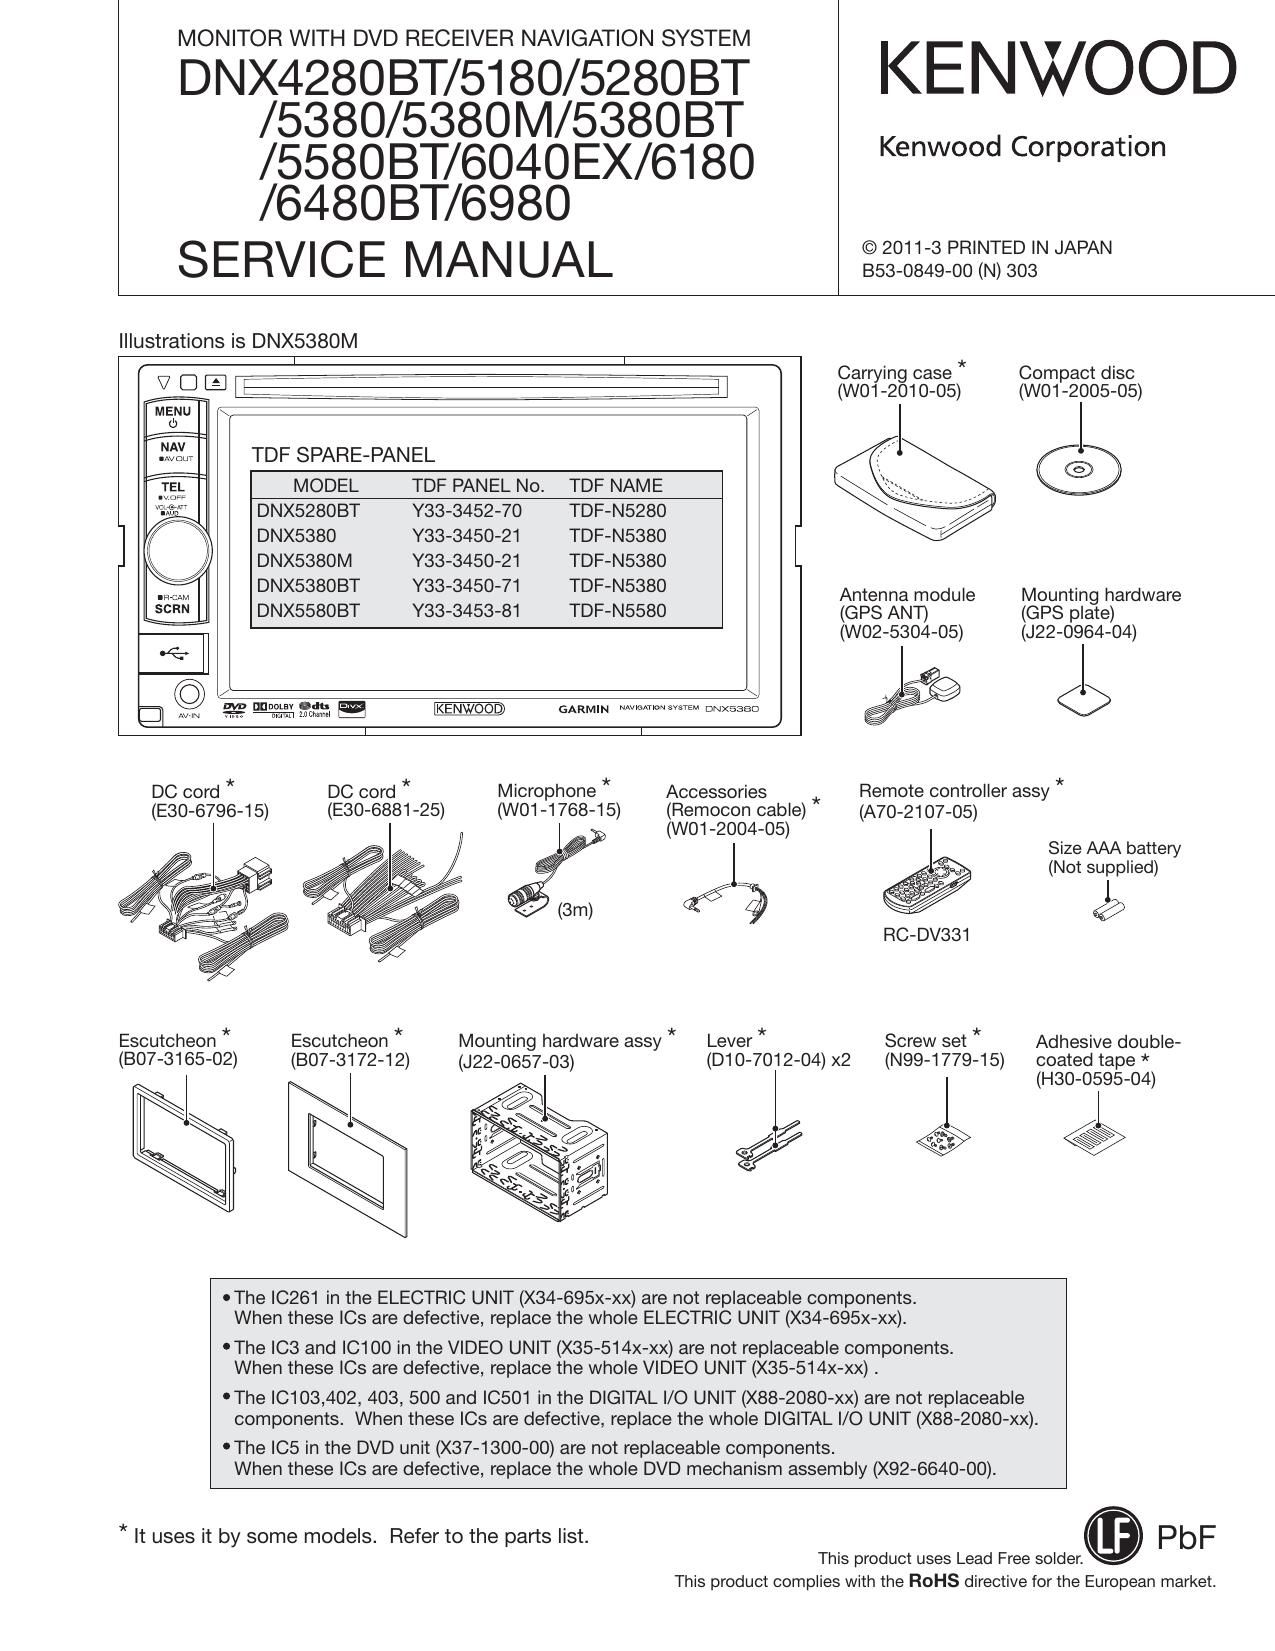 Kenwood DNX 5580 BT Service Manual